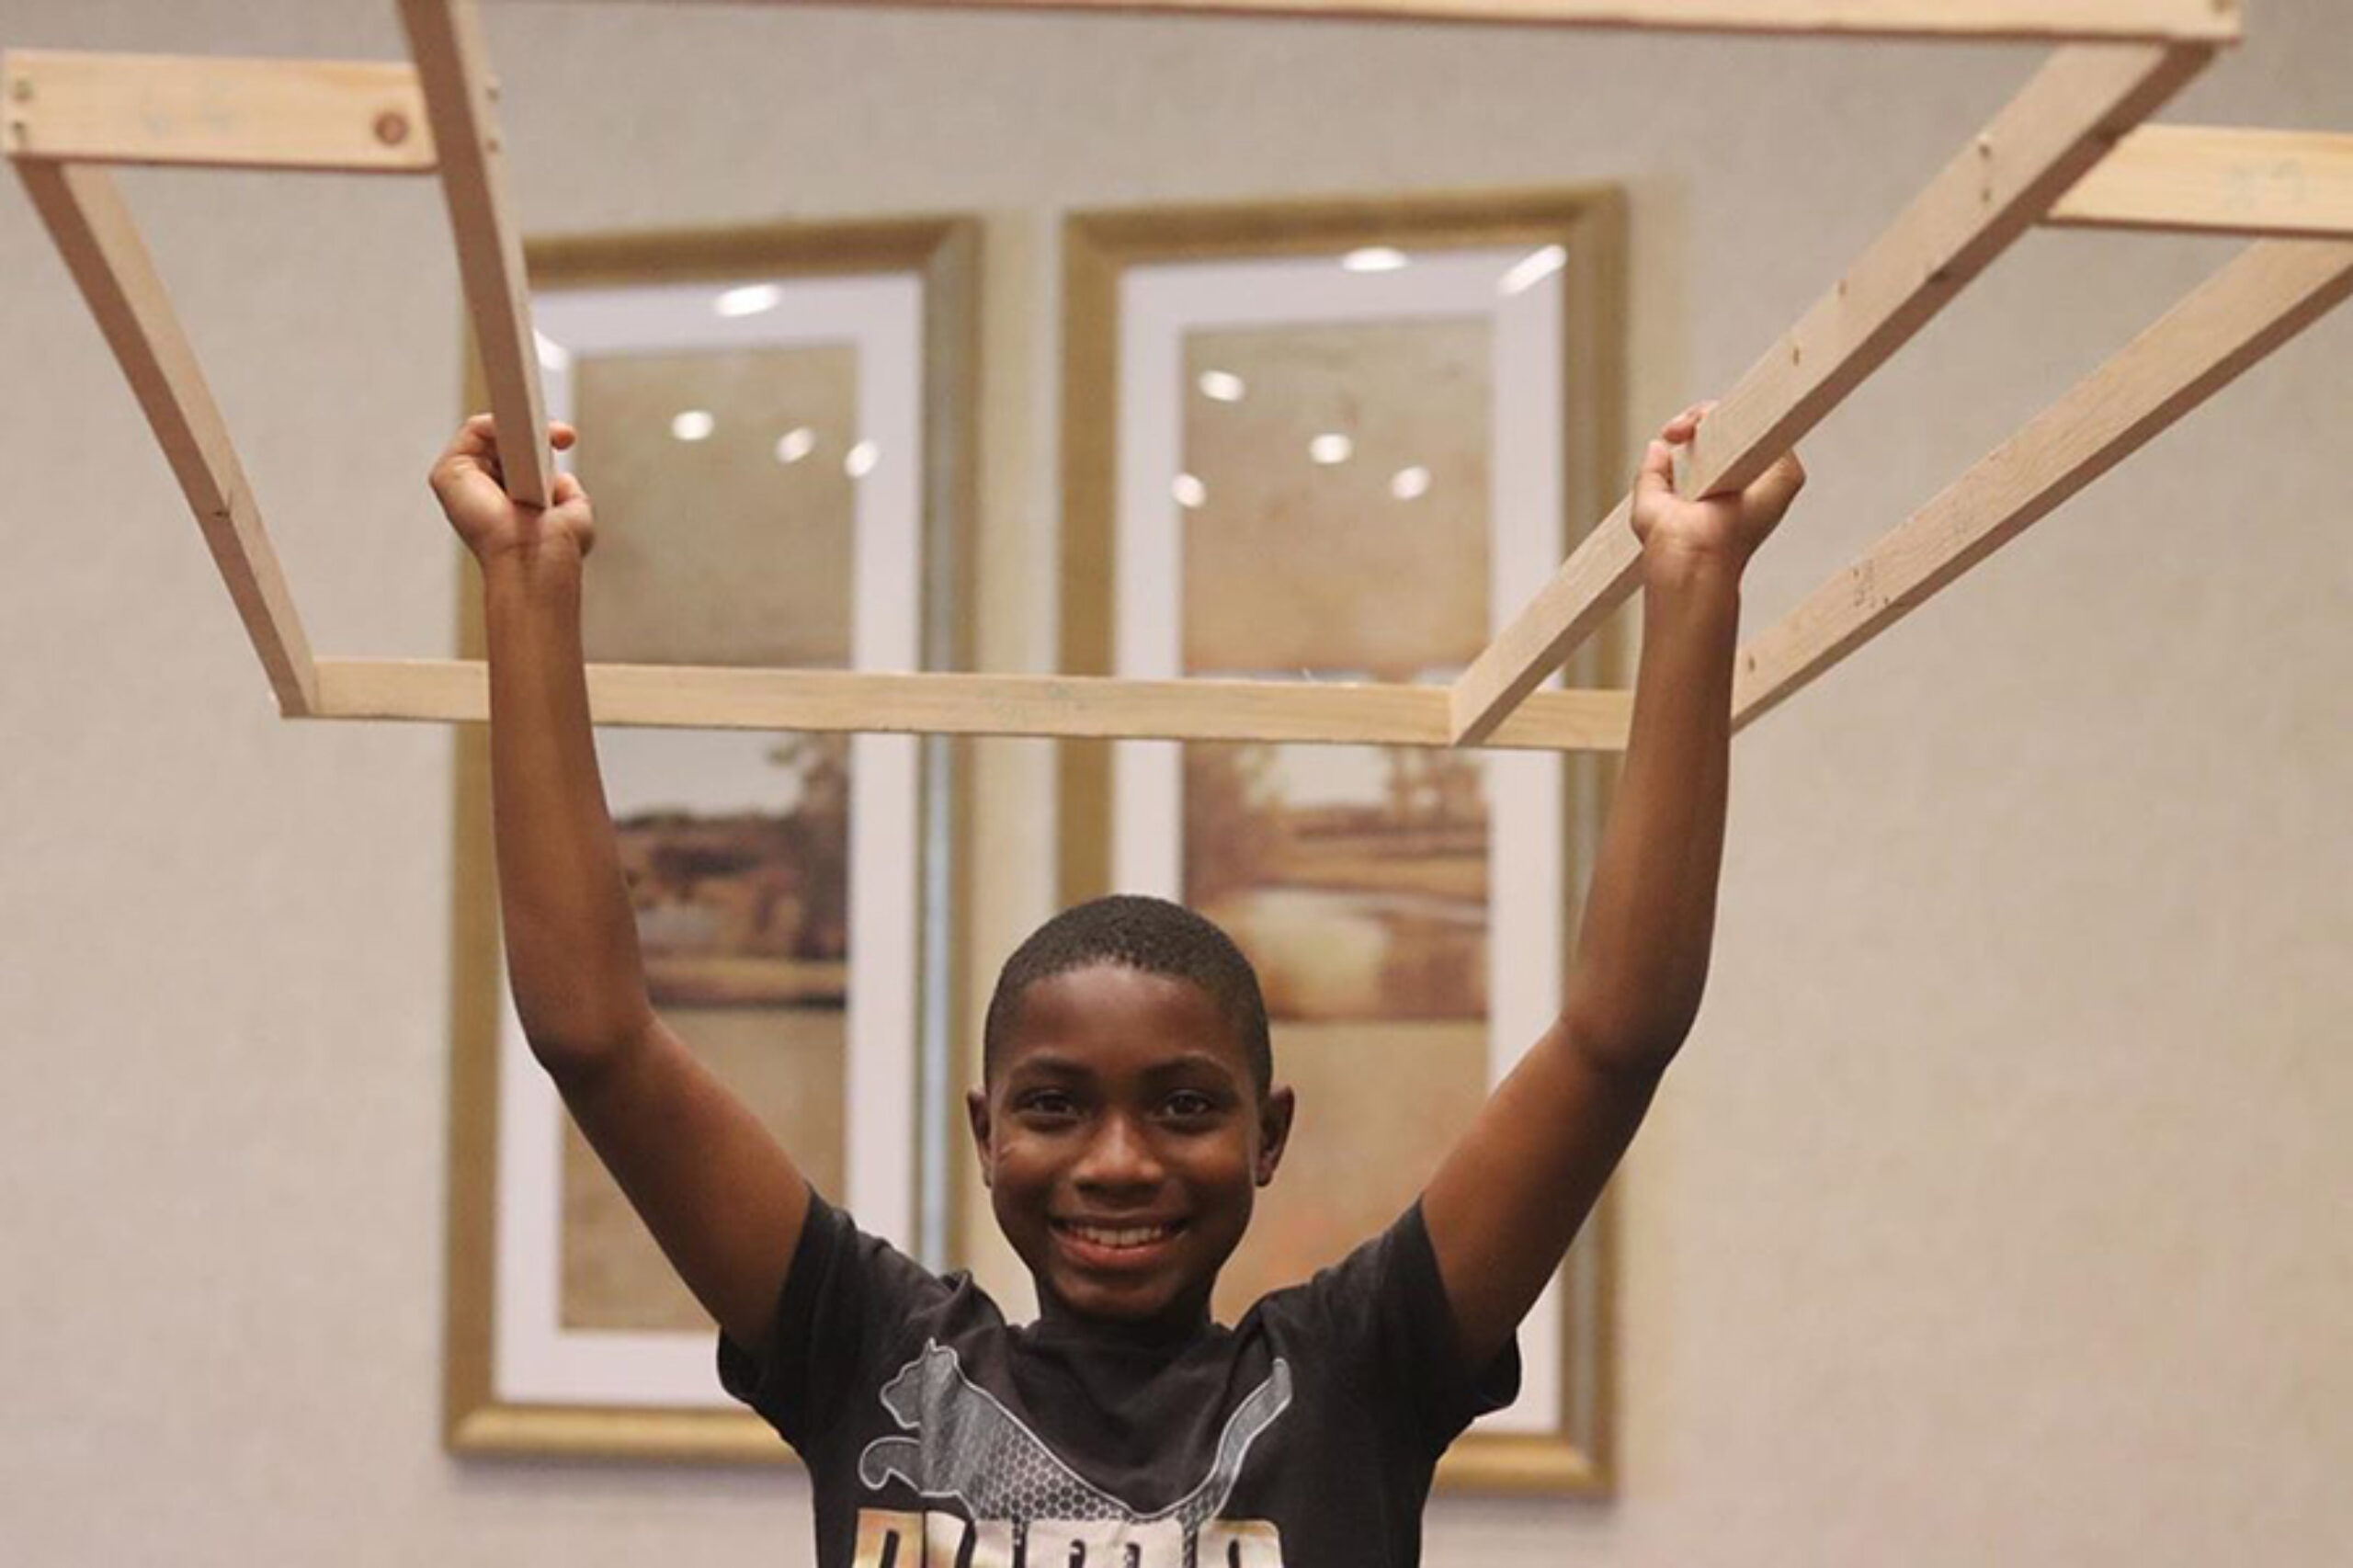 Boy holding up artwork made of wood